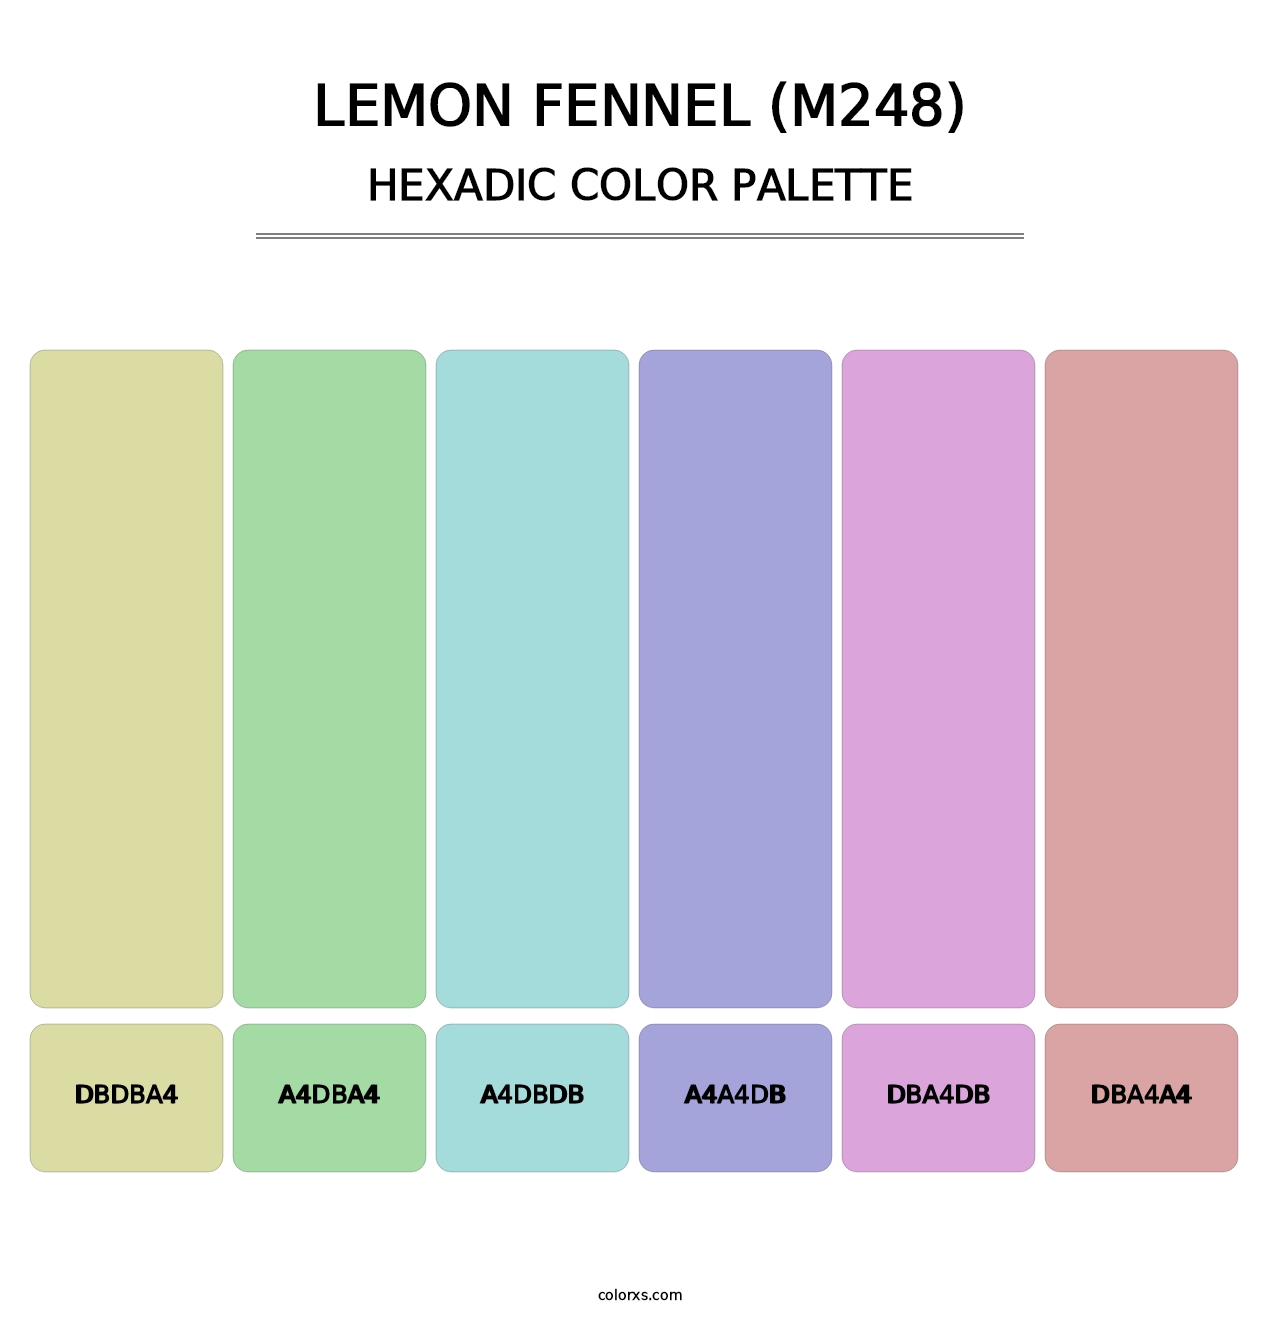 Lemon Fennel (M248) - Hexadic Color Palette